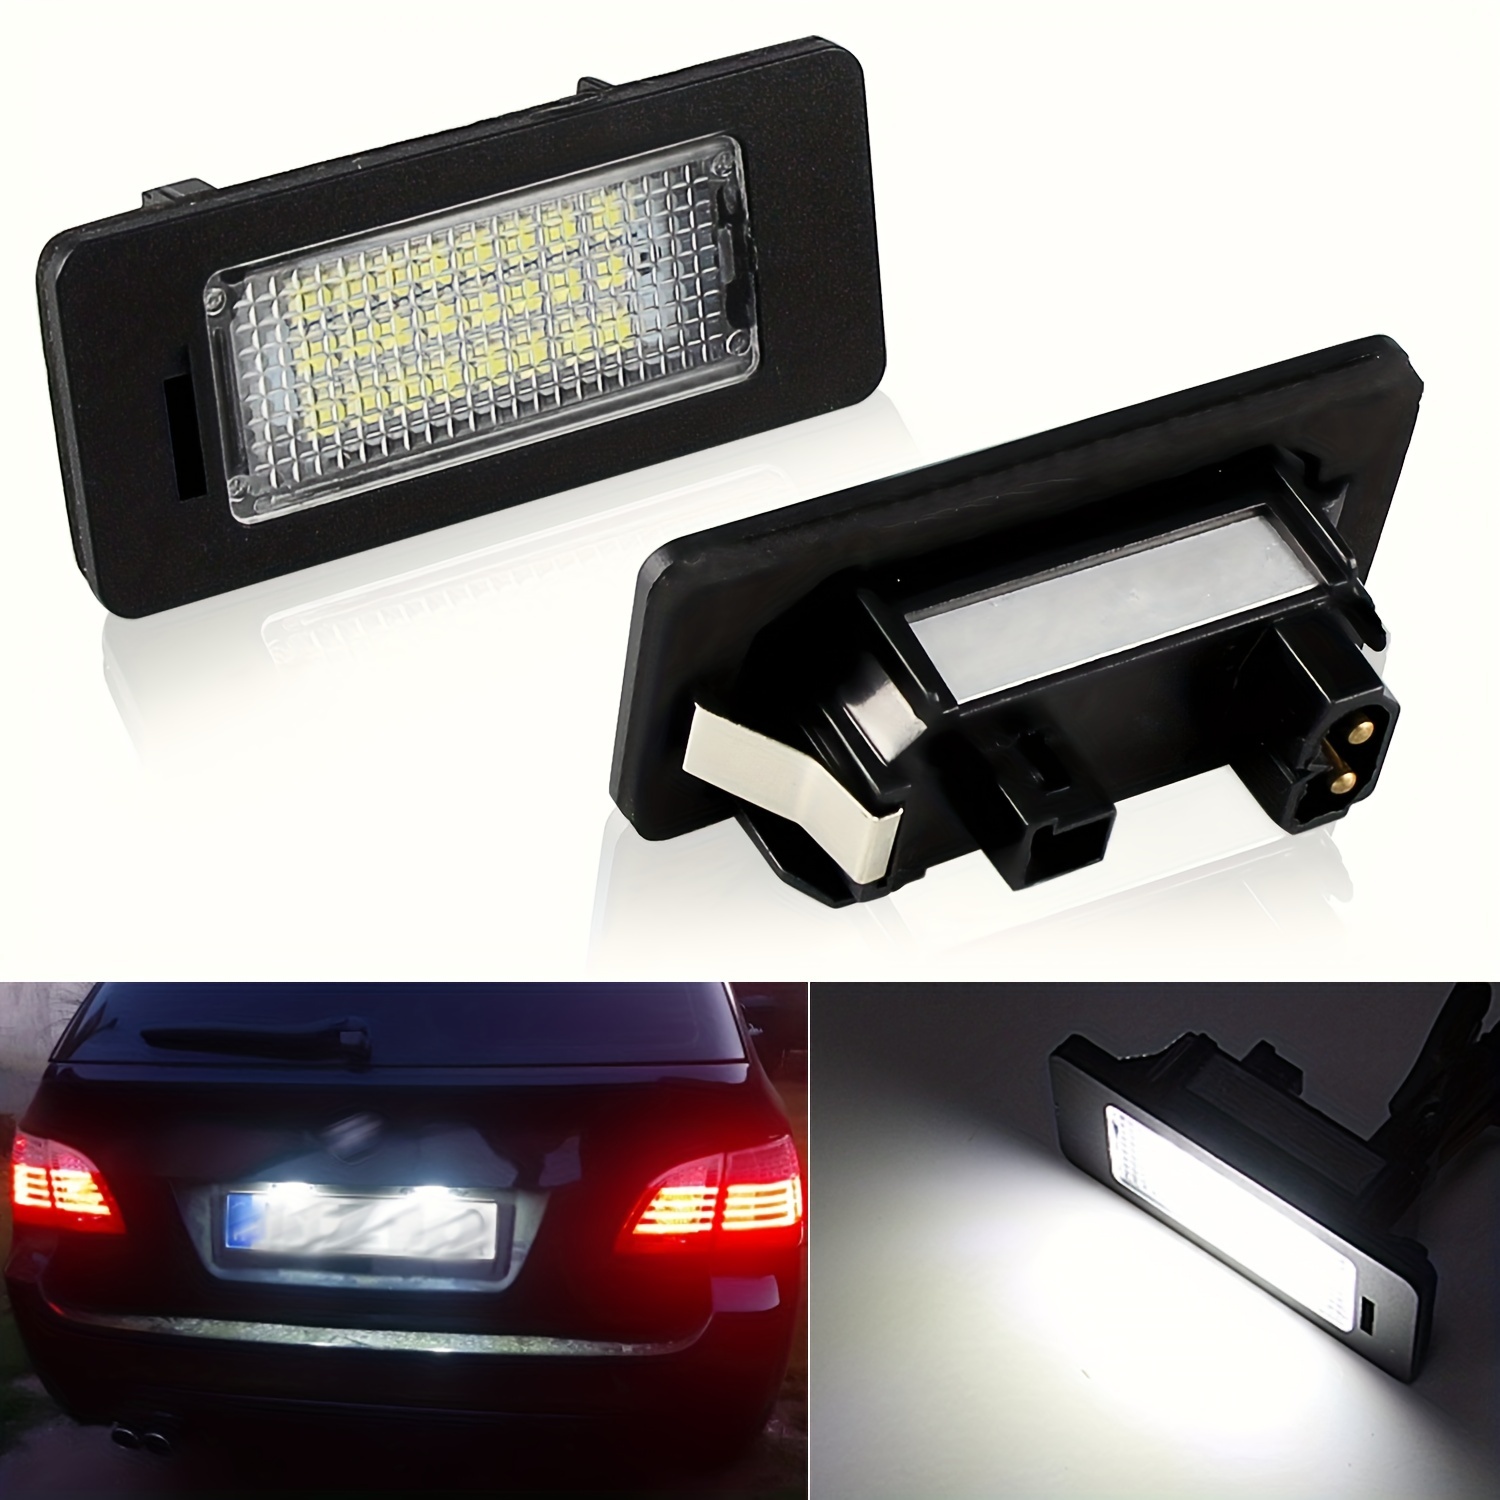 LED Kofferraum Beleuchtung für BMW 1ER E87, E81, E82, E88 | Led  Innenbeleuchtung CANbus